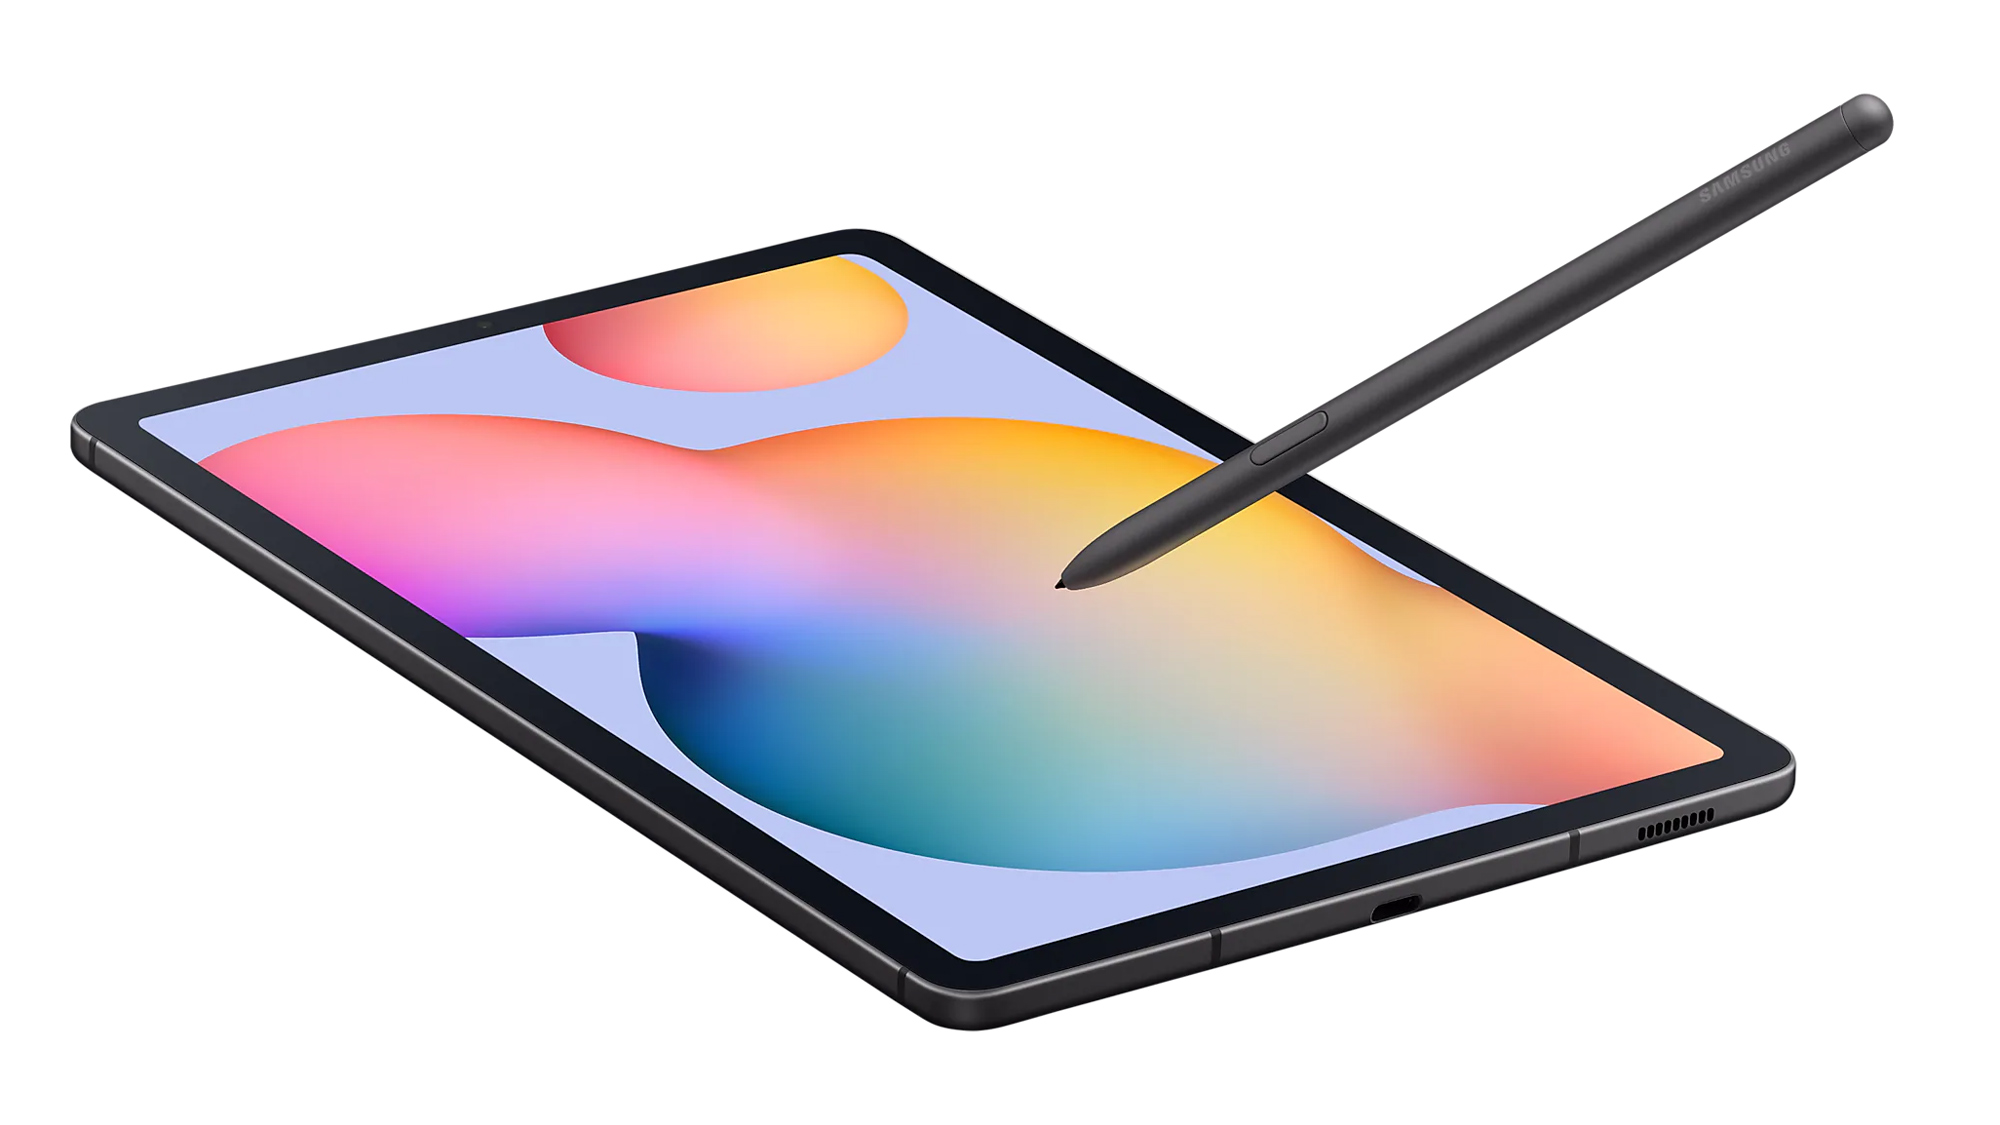 Samsung Galaxy Tab S6 Lite (2022): appare una nuova versione del tablet